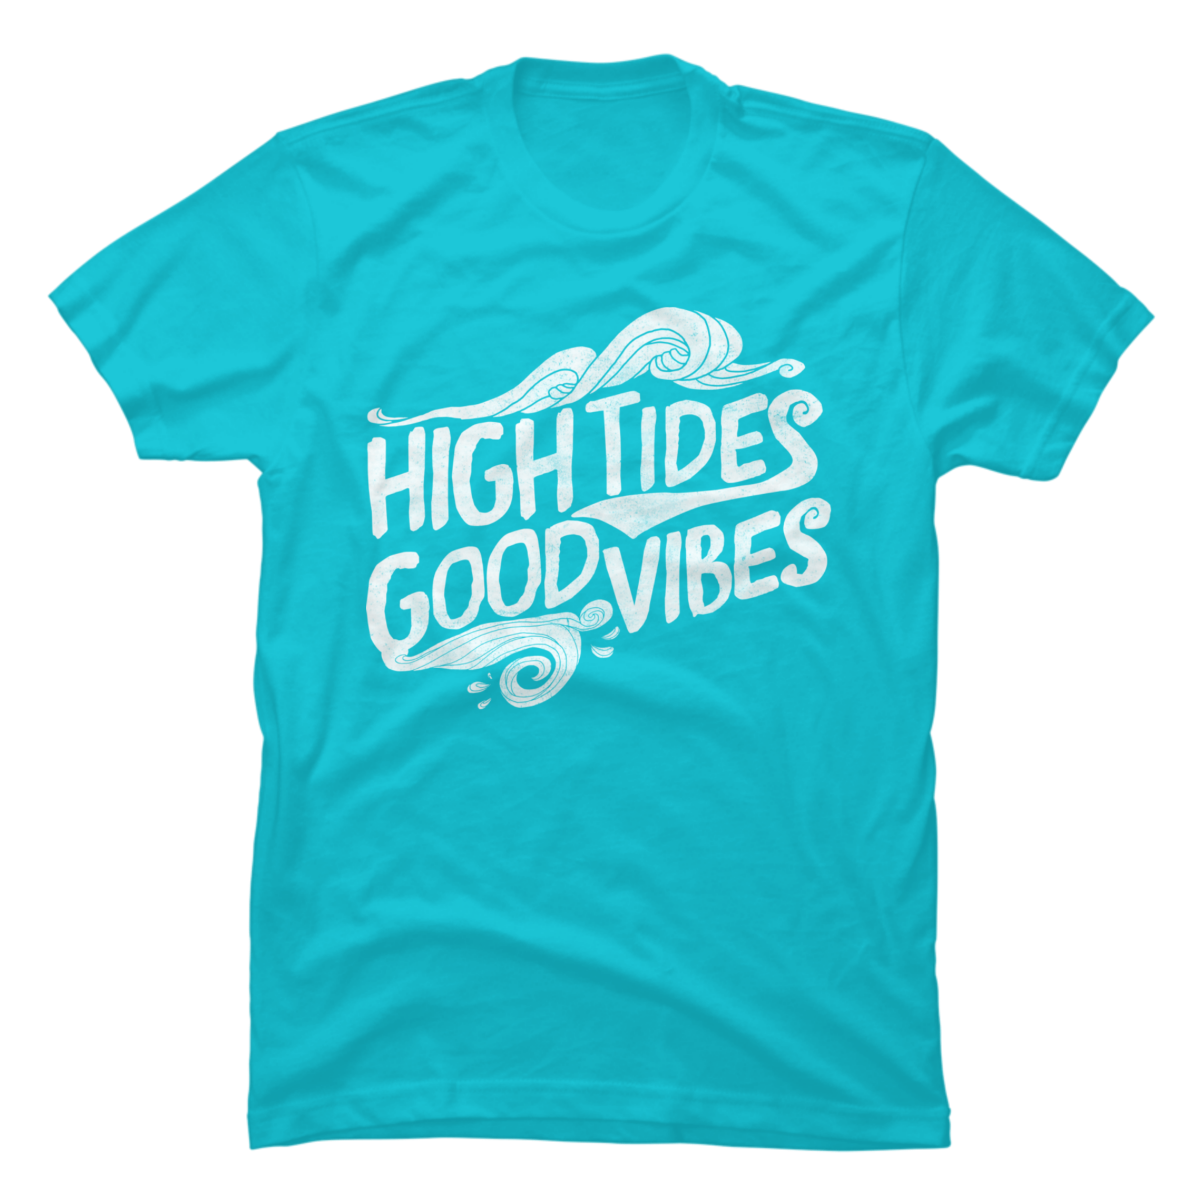 good vibes high tides shirt